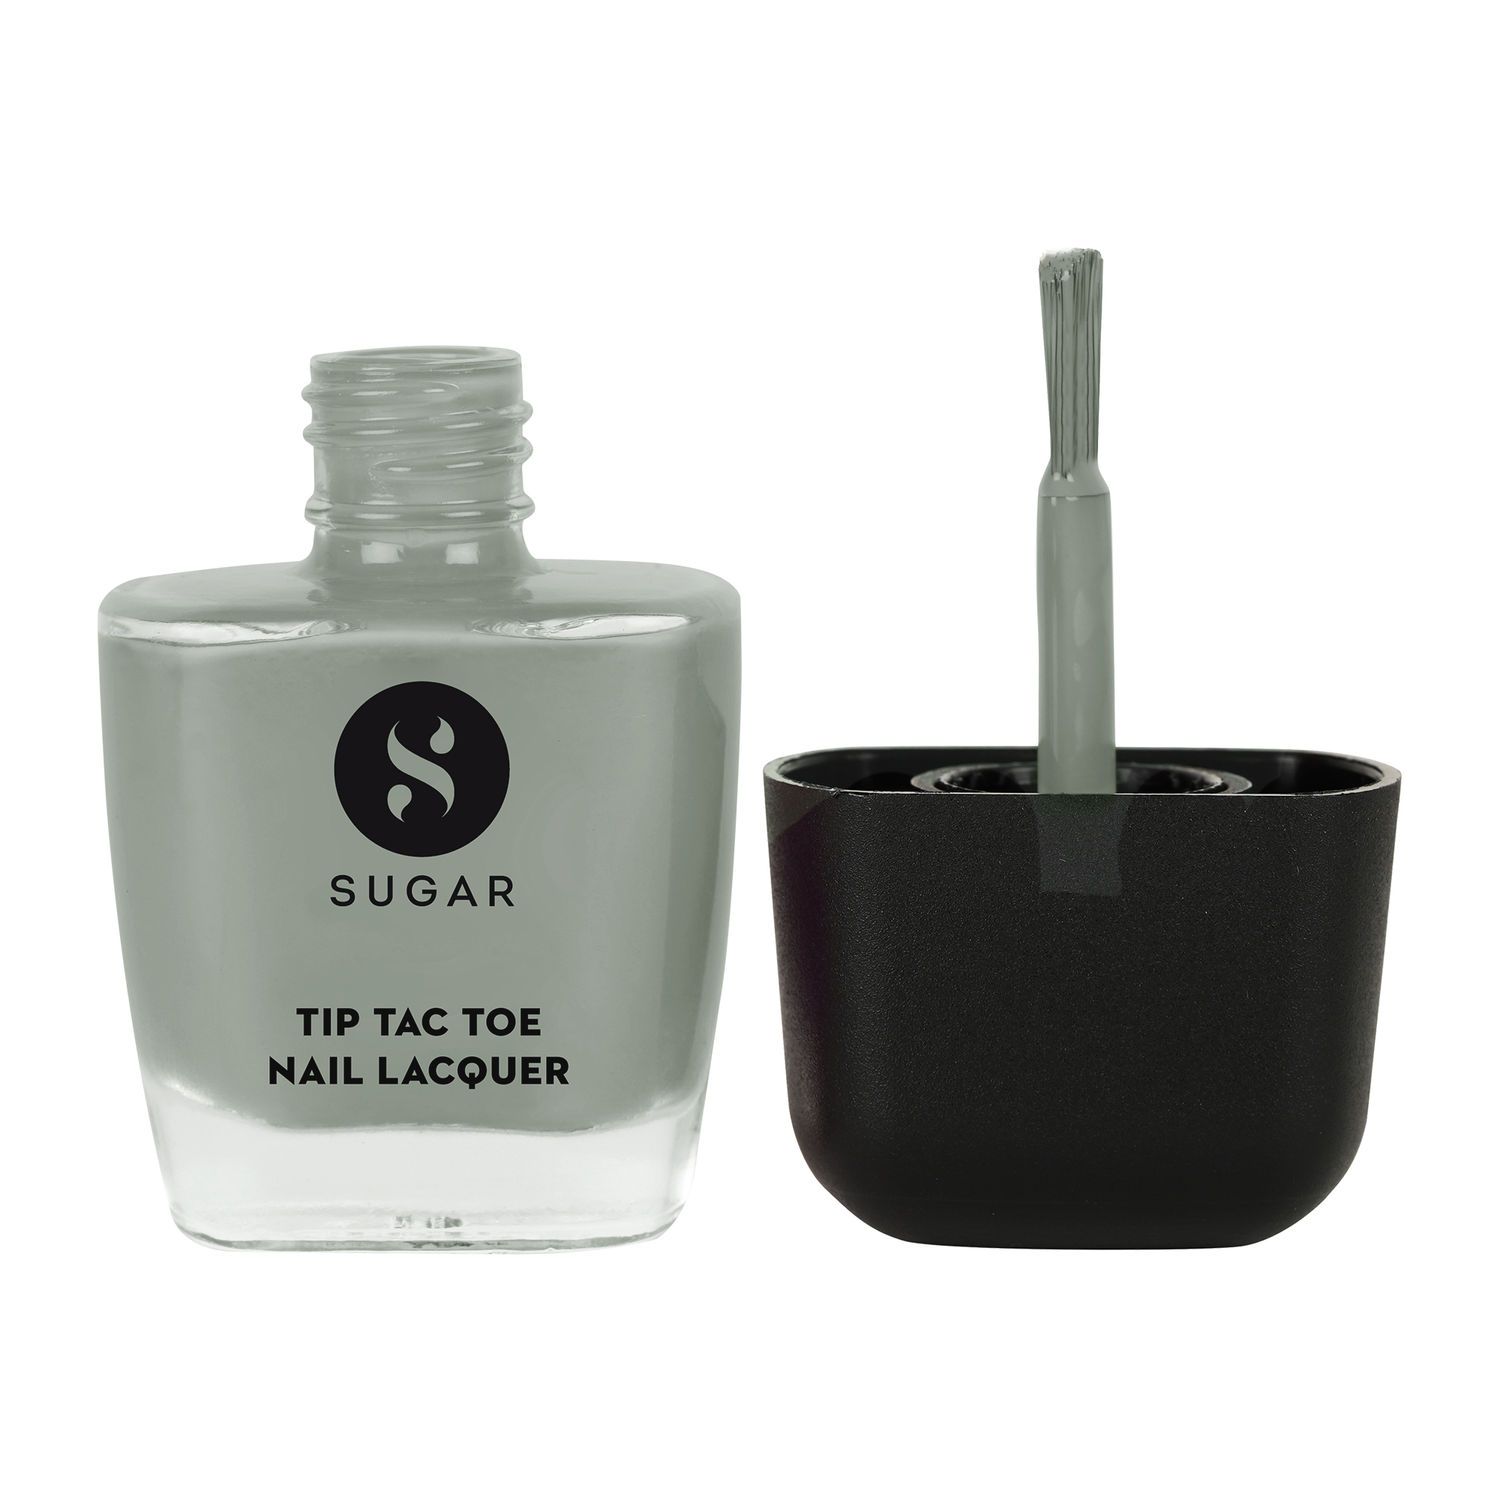 New Launch Alert - SUGAR Tip Tac Toe Nail Lacquer Classic | SUGAR Cosmetics  - YouTube